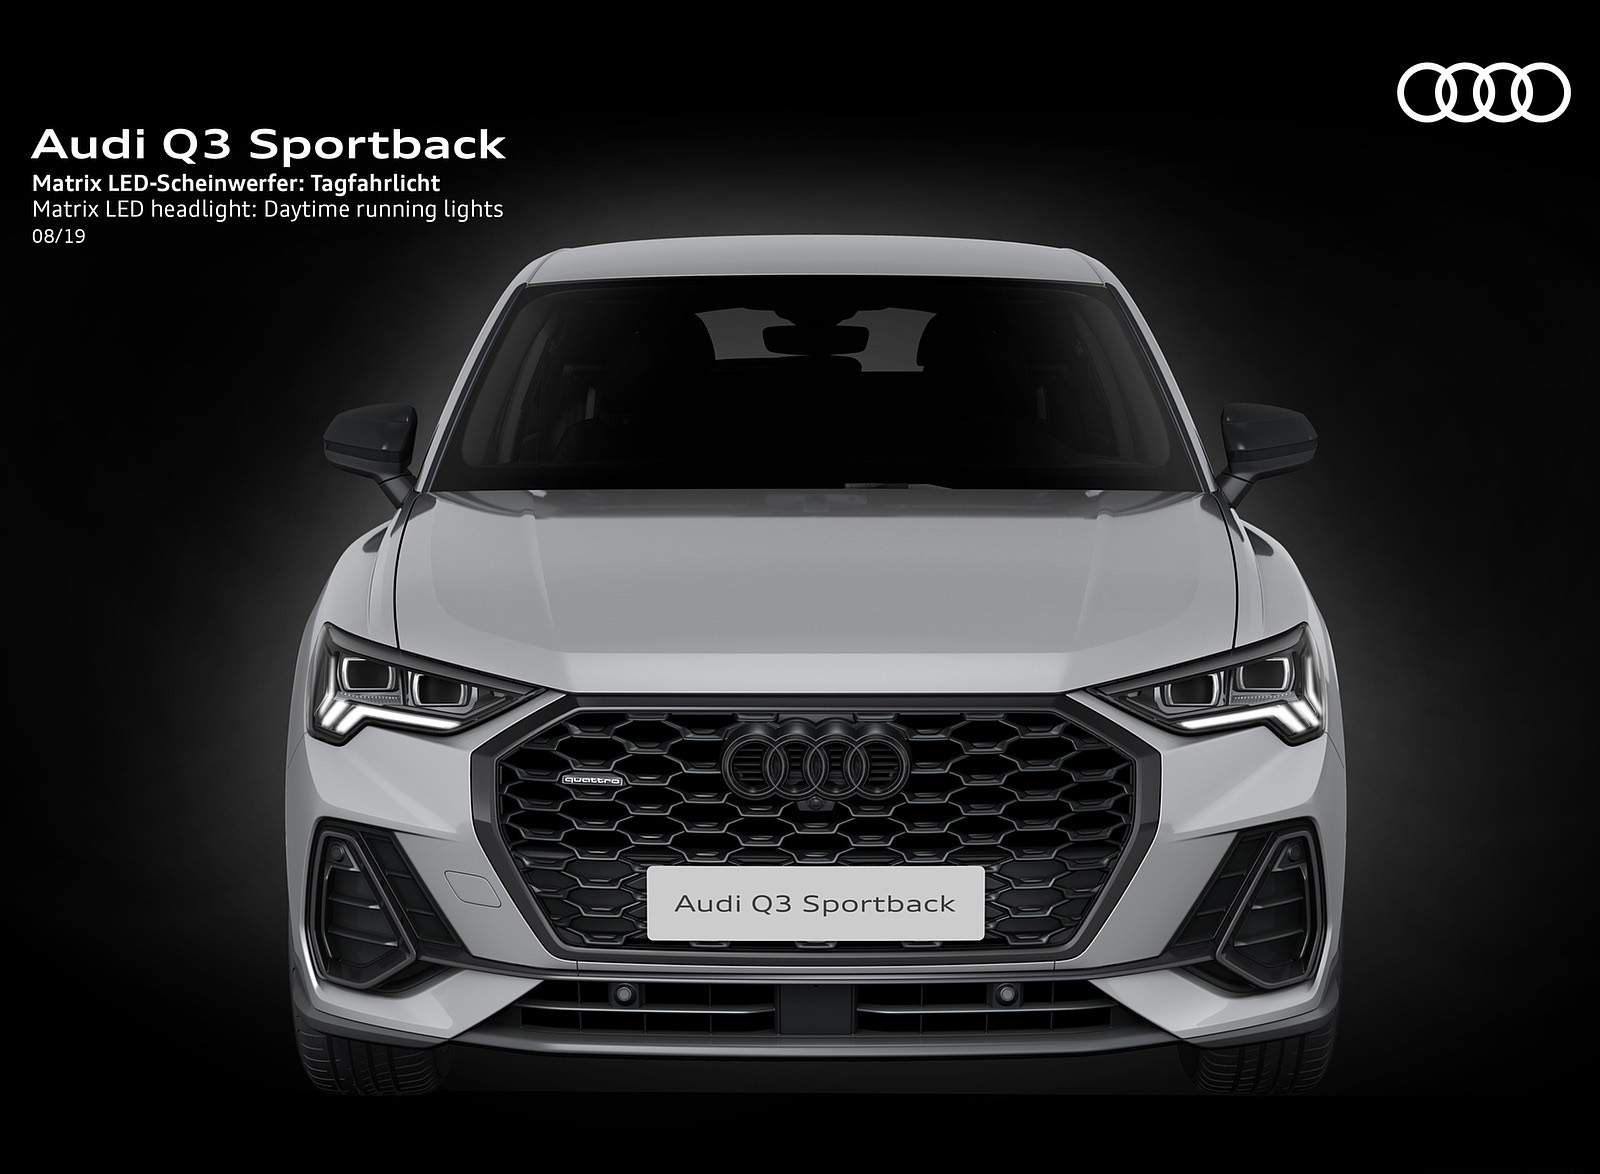 2020 Audi Q3 Sportback Matrix LED headlight Daytime running lights Wallpapers #238 of 285